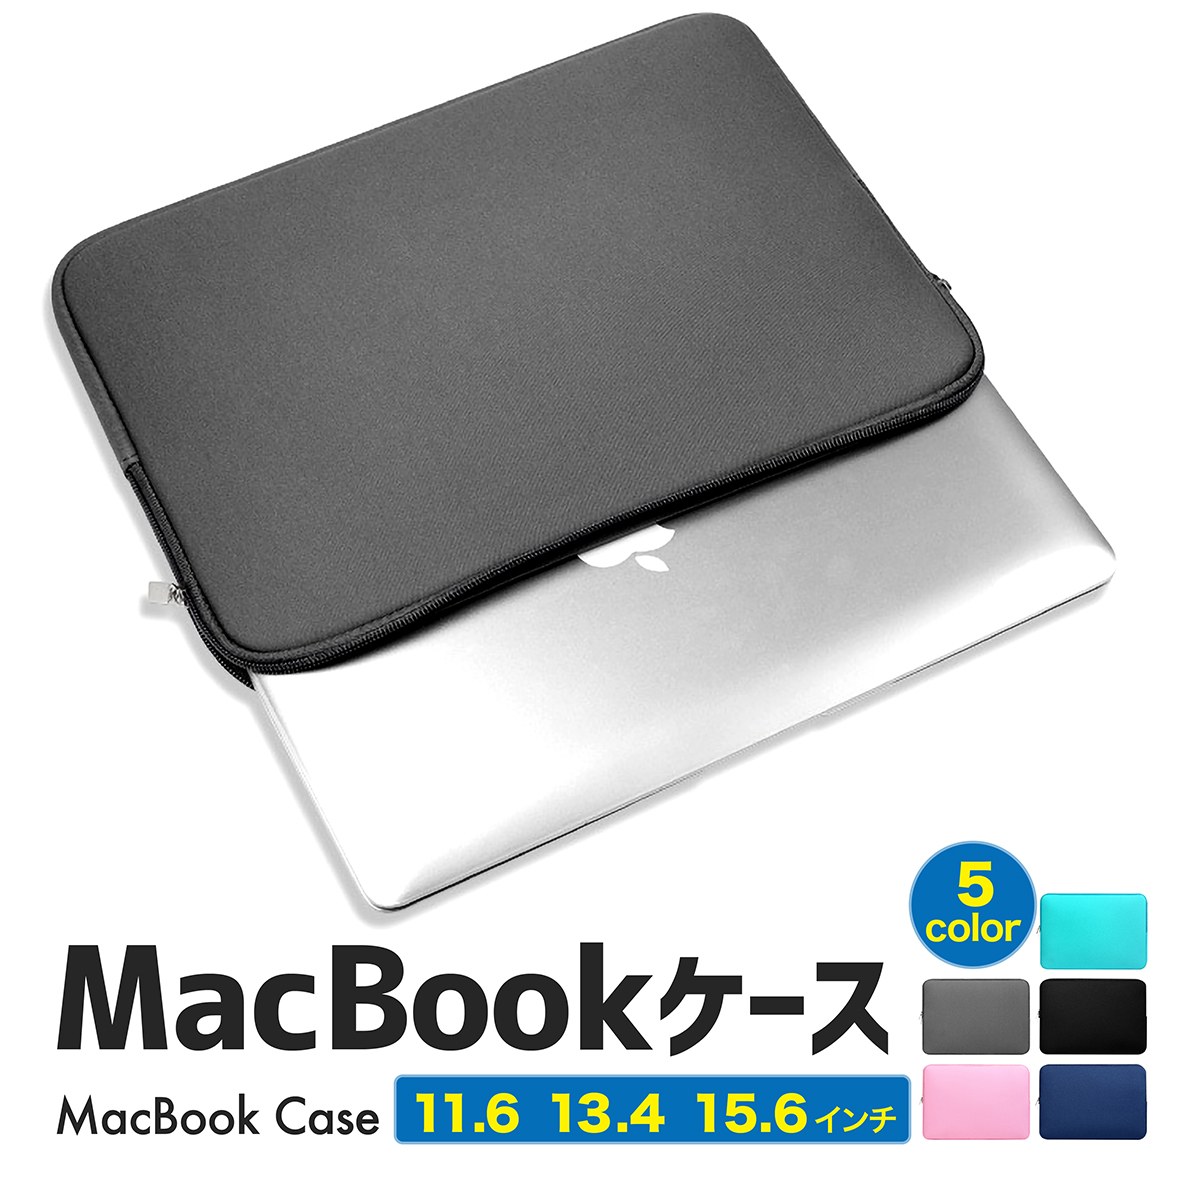 macbook ケース パソコンケース 保護ケース 軽量 11.6インチ 13.3インチ 15.6インチ 傷防止 持ち運び マックブック用ケース コンパクト スマート